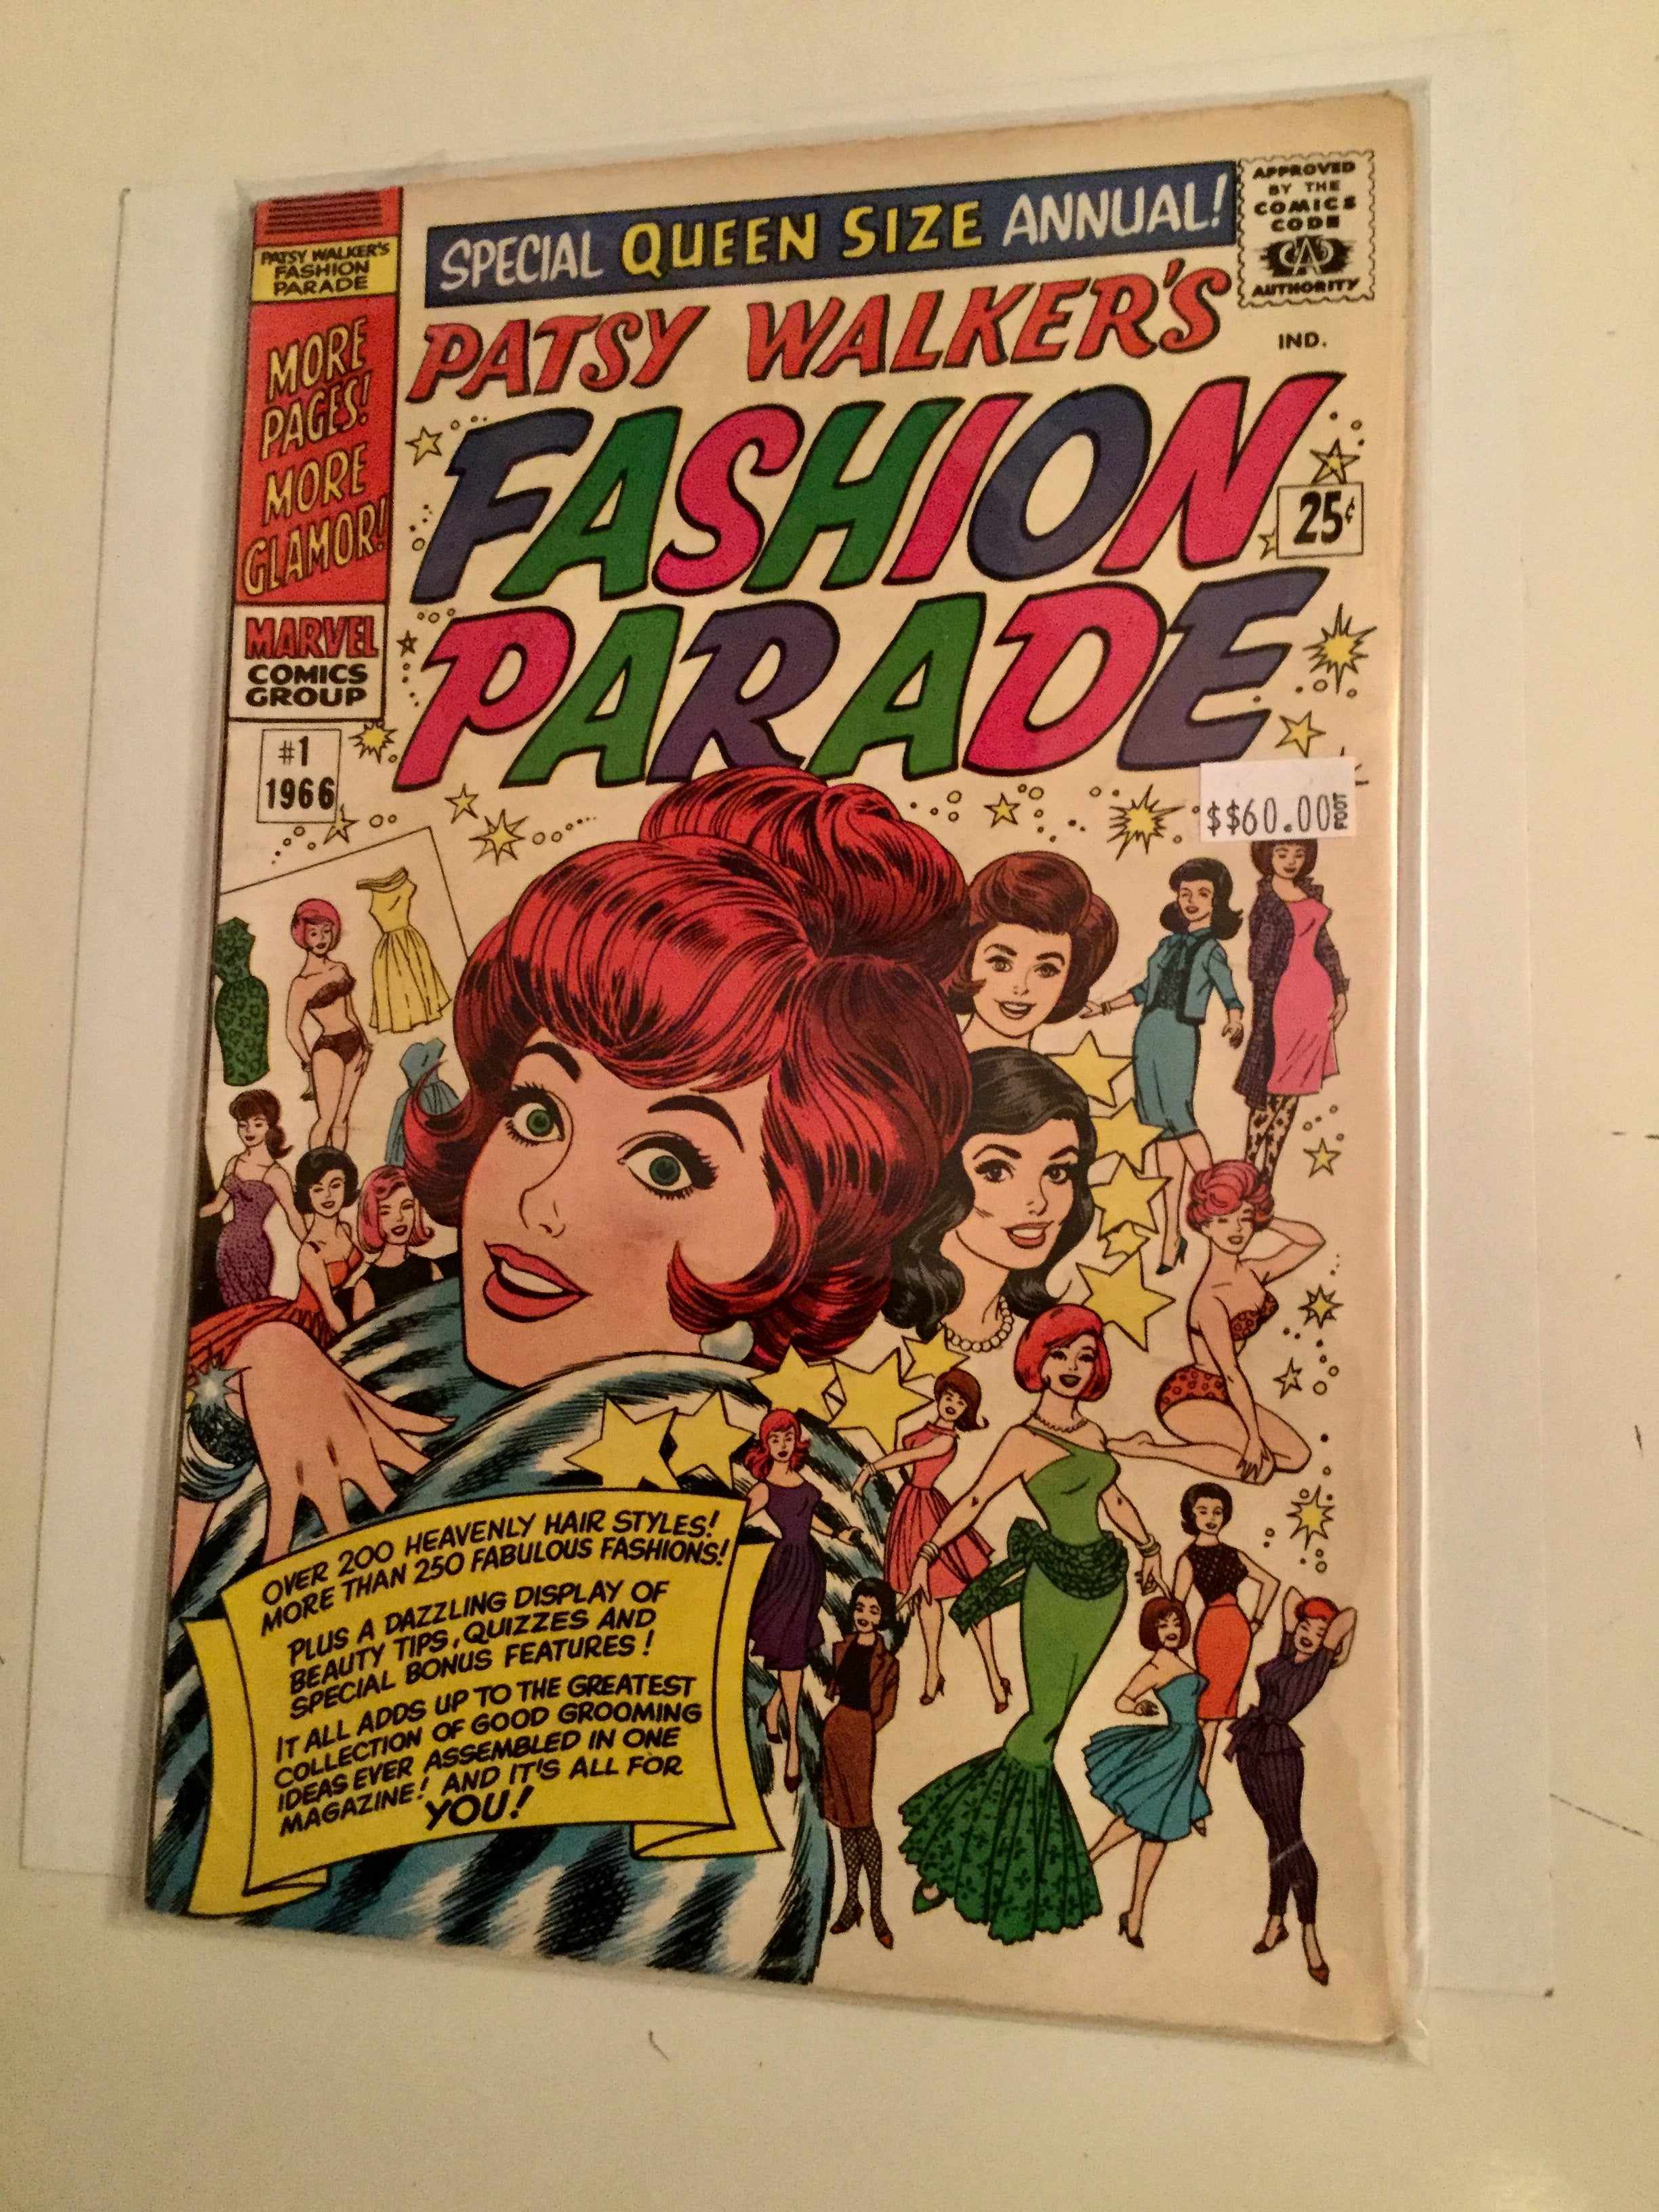 Patsy Walker’s Fashion Parade #1 comic book annual 1966